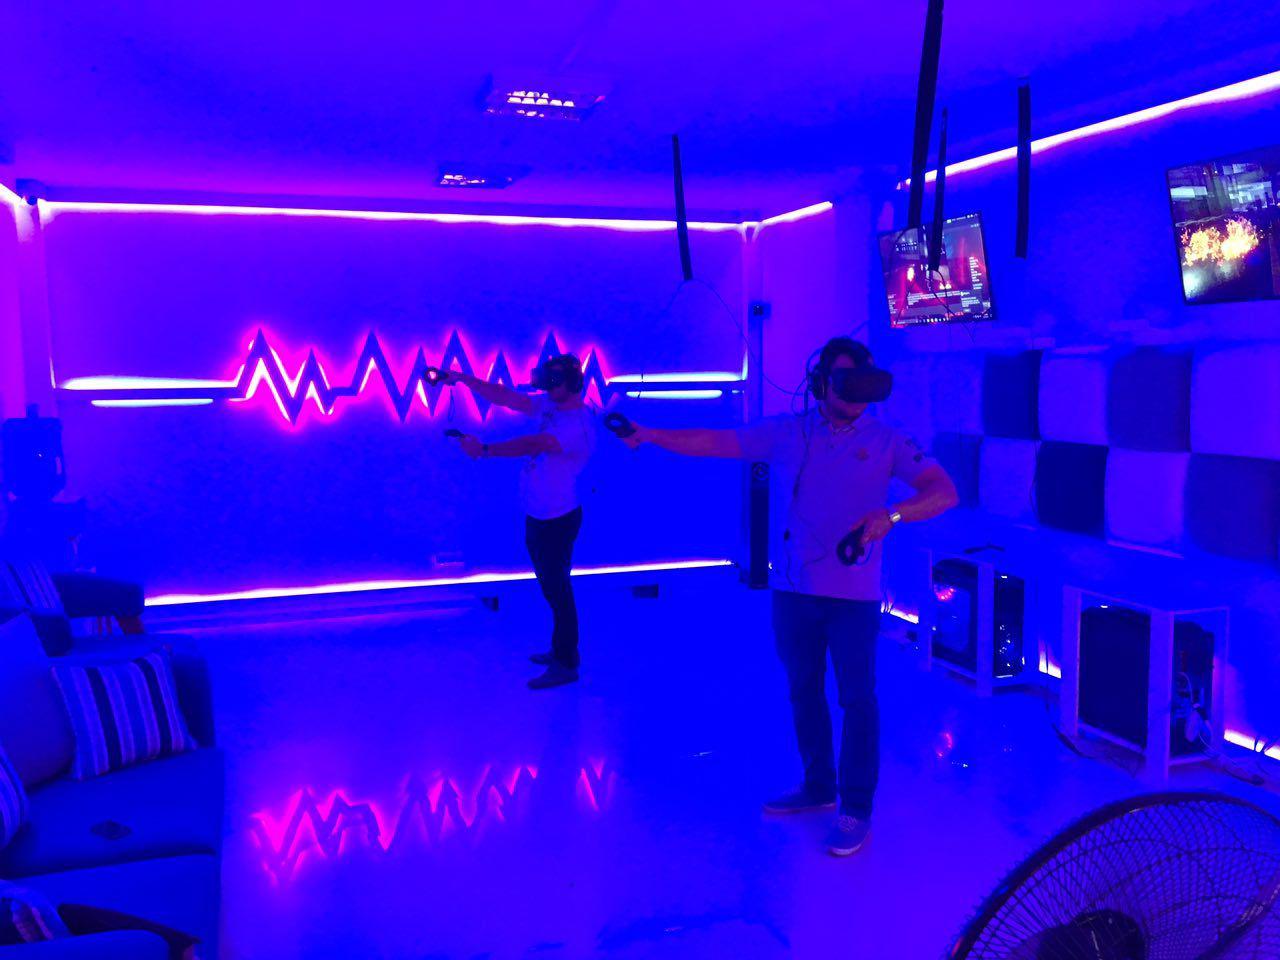 VR Centre